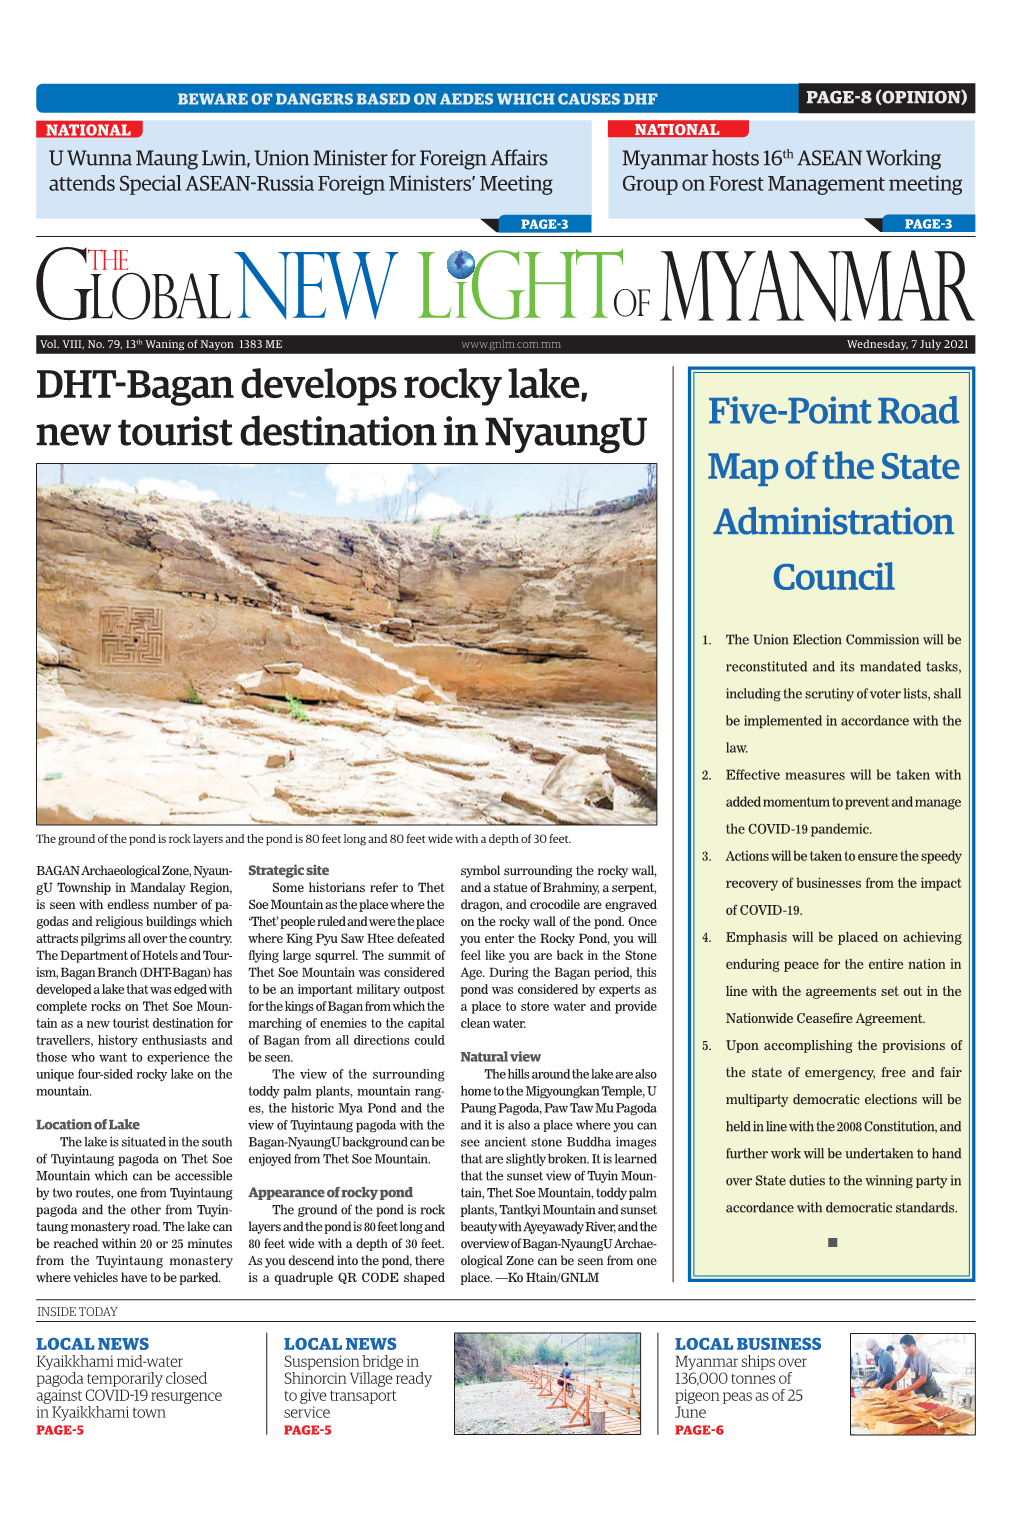 DHT-Bagan Develops Rocky Lake, New Tourist Destination in Nyaungu